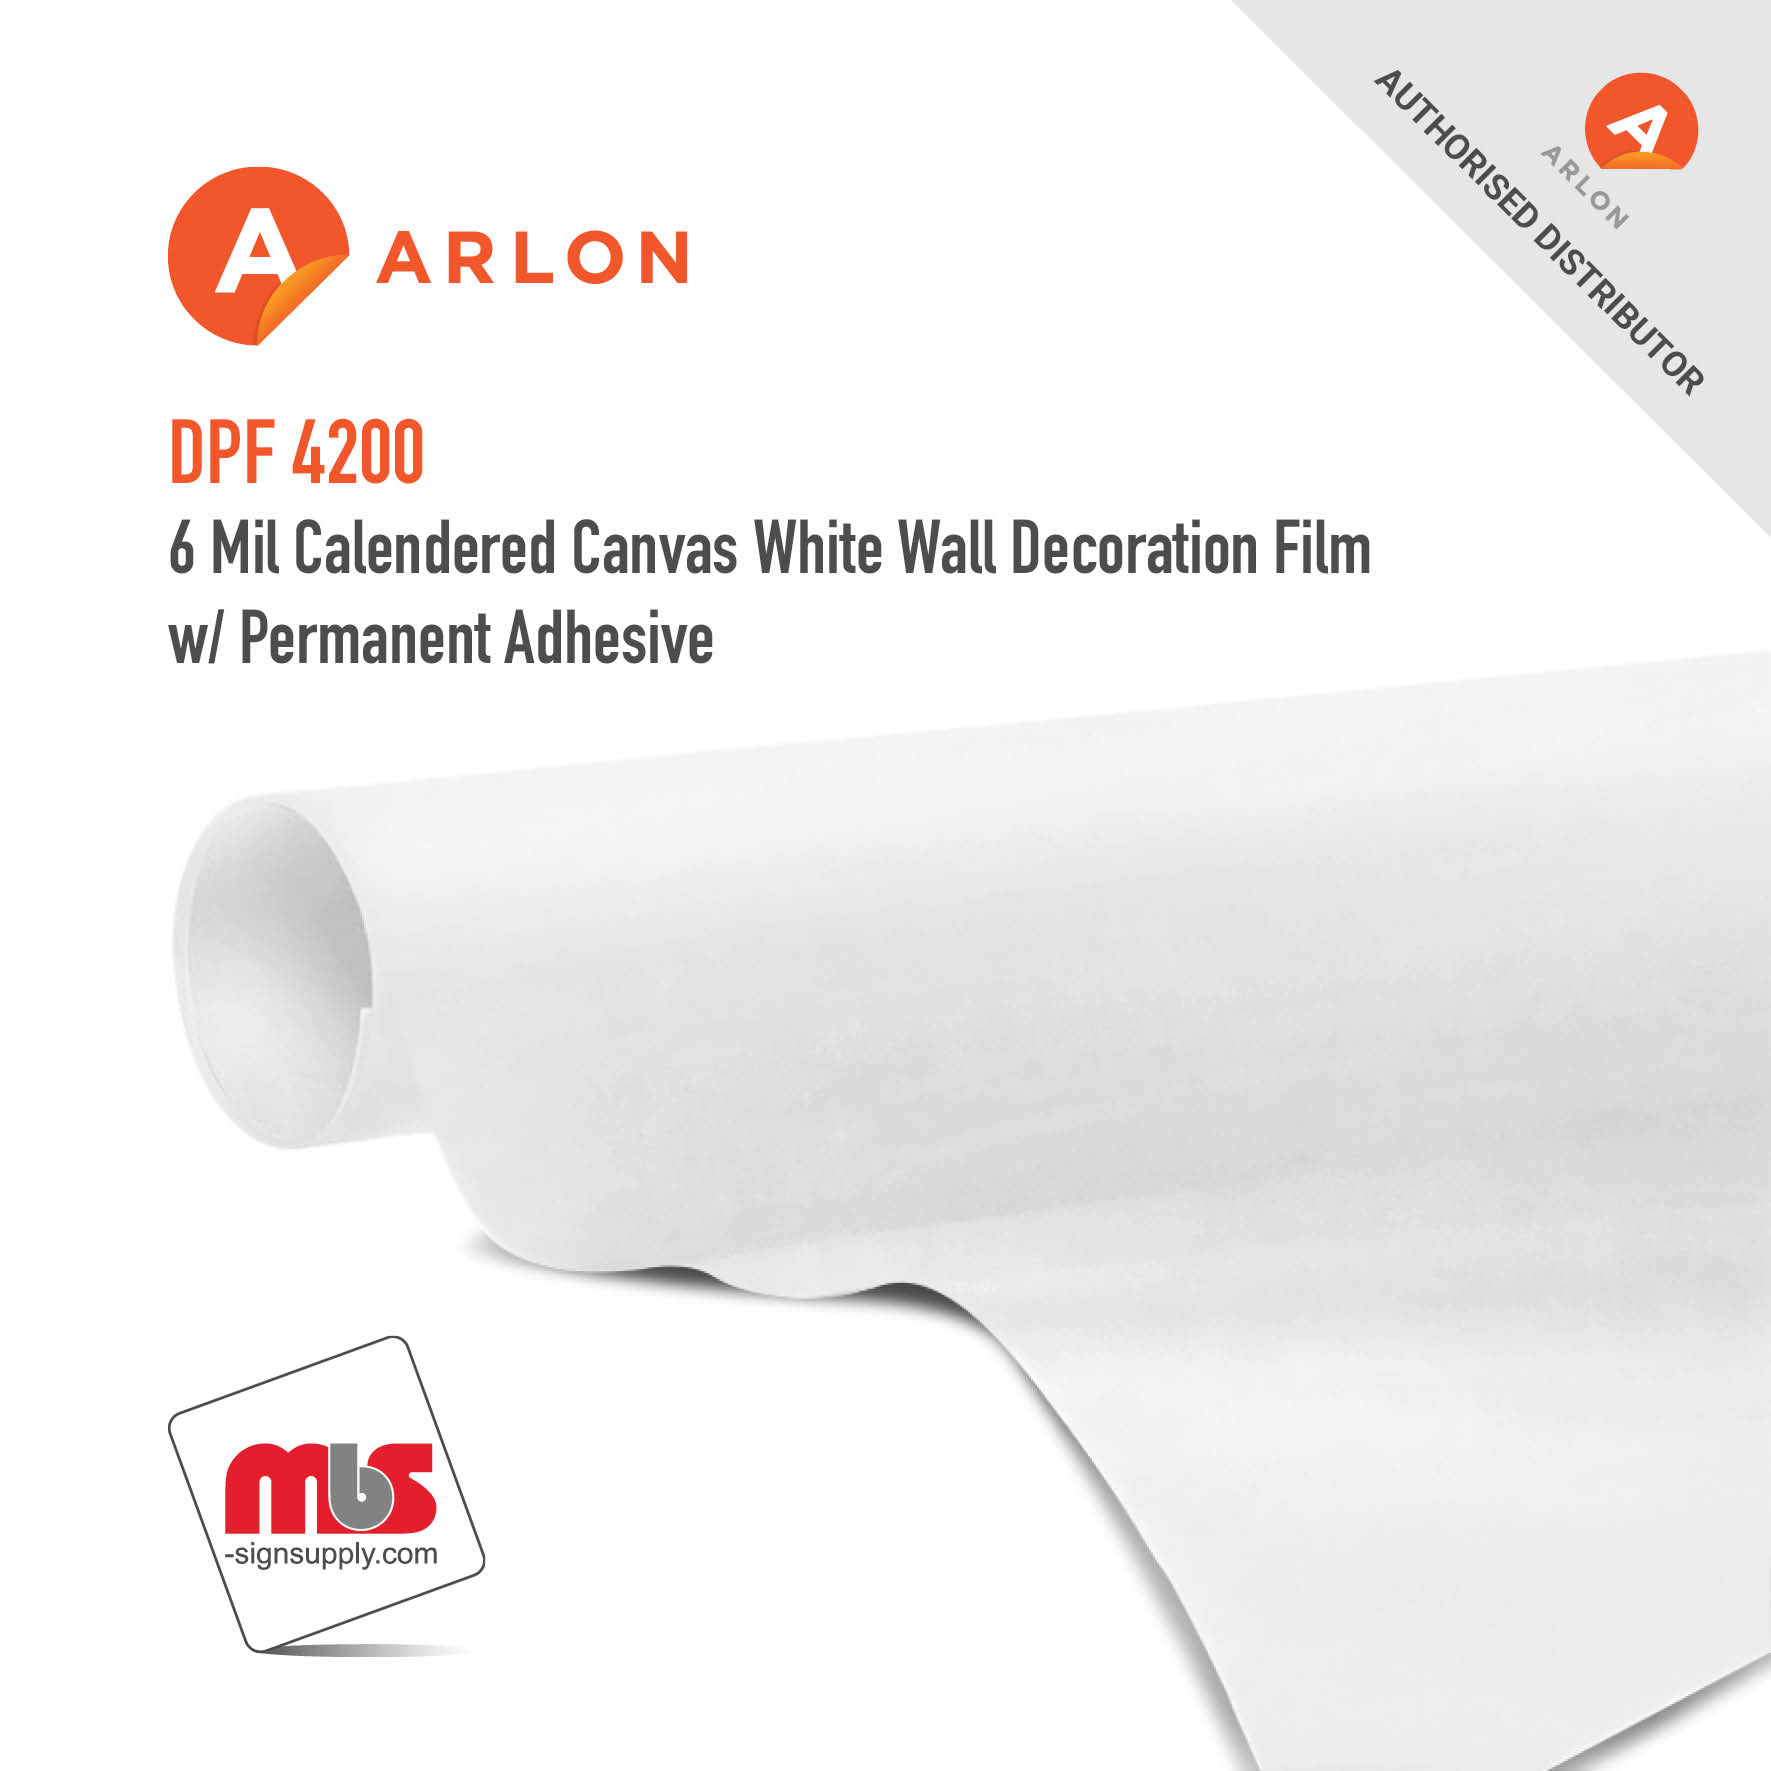 54'' x 25 Yard Roll - Arlon DPF 4200 6 Mil Calendered Canvas White Wall Decoration Film w/ Permanent Adhesive